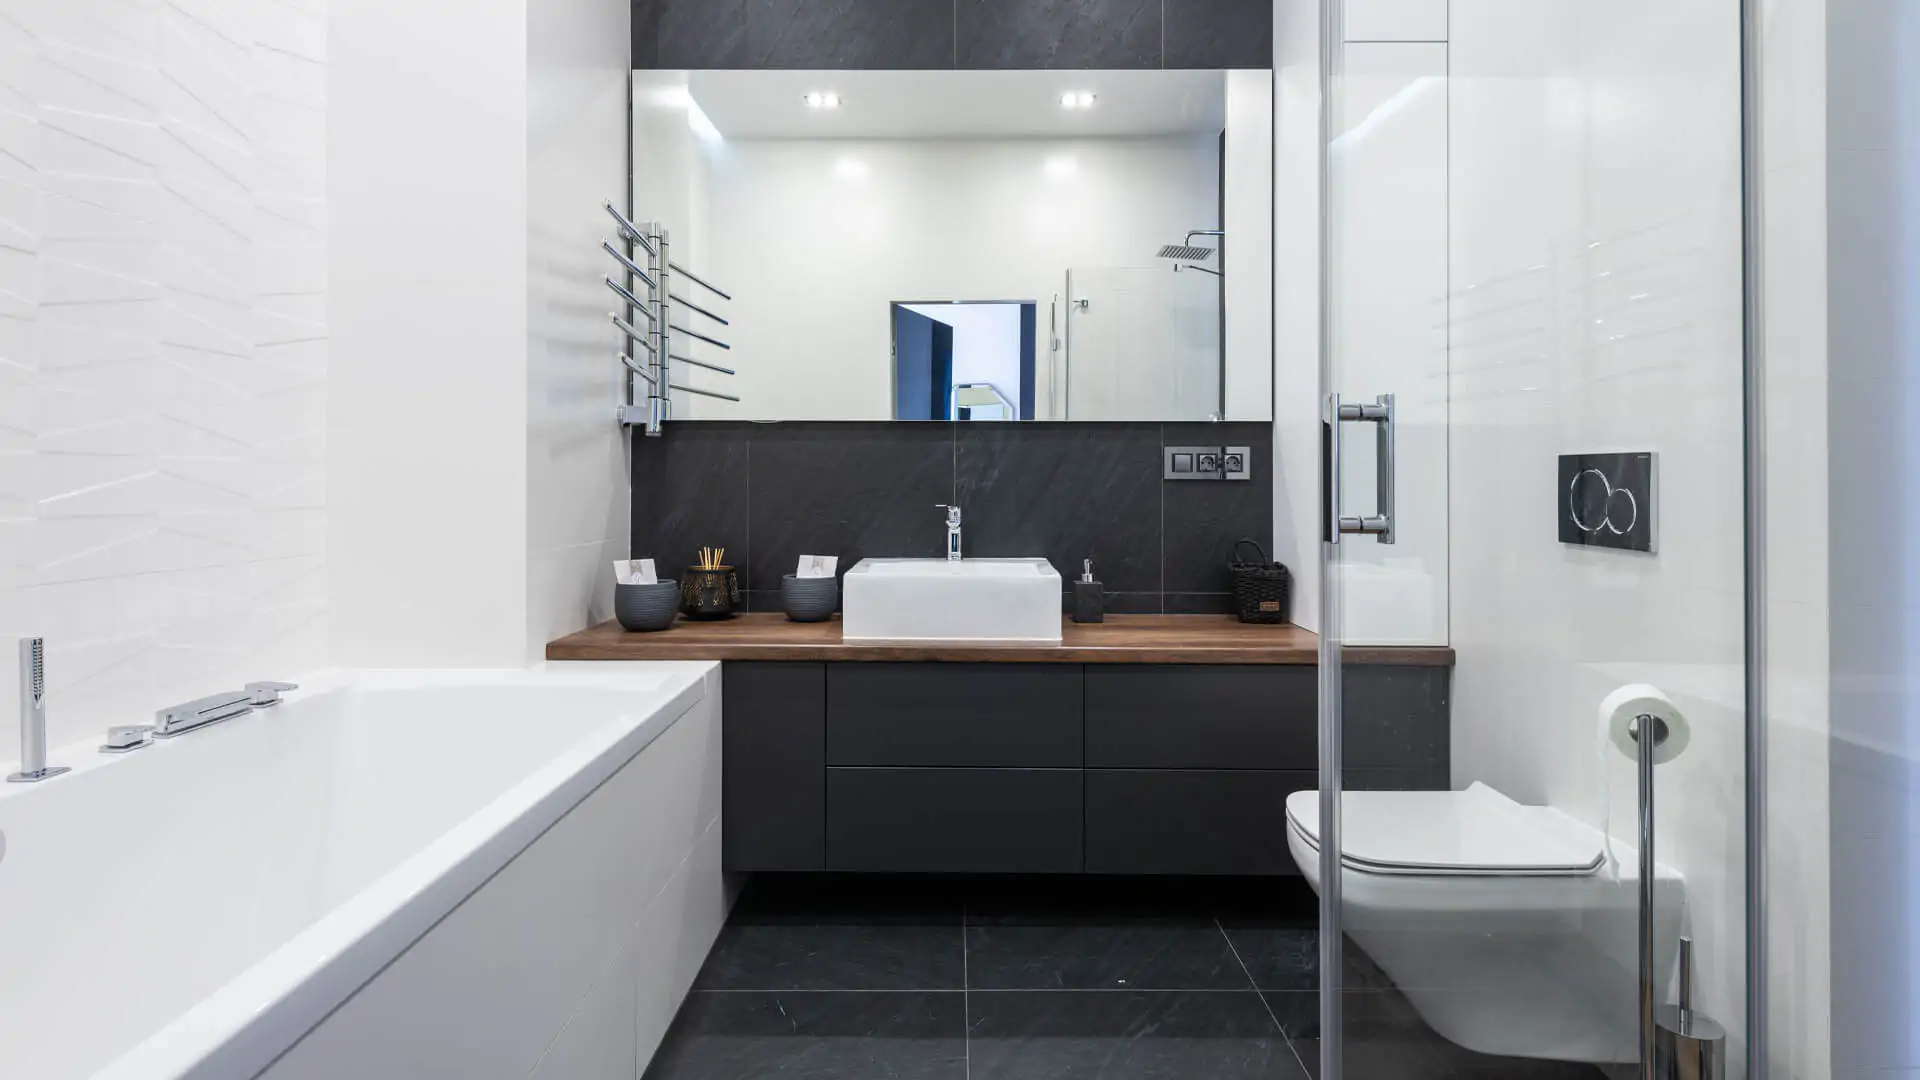 Duplex House Bathroom Interior Design